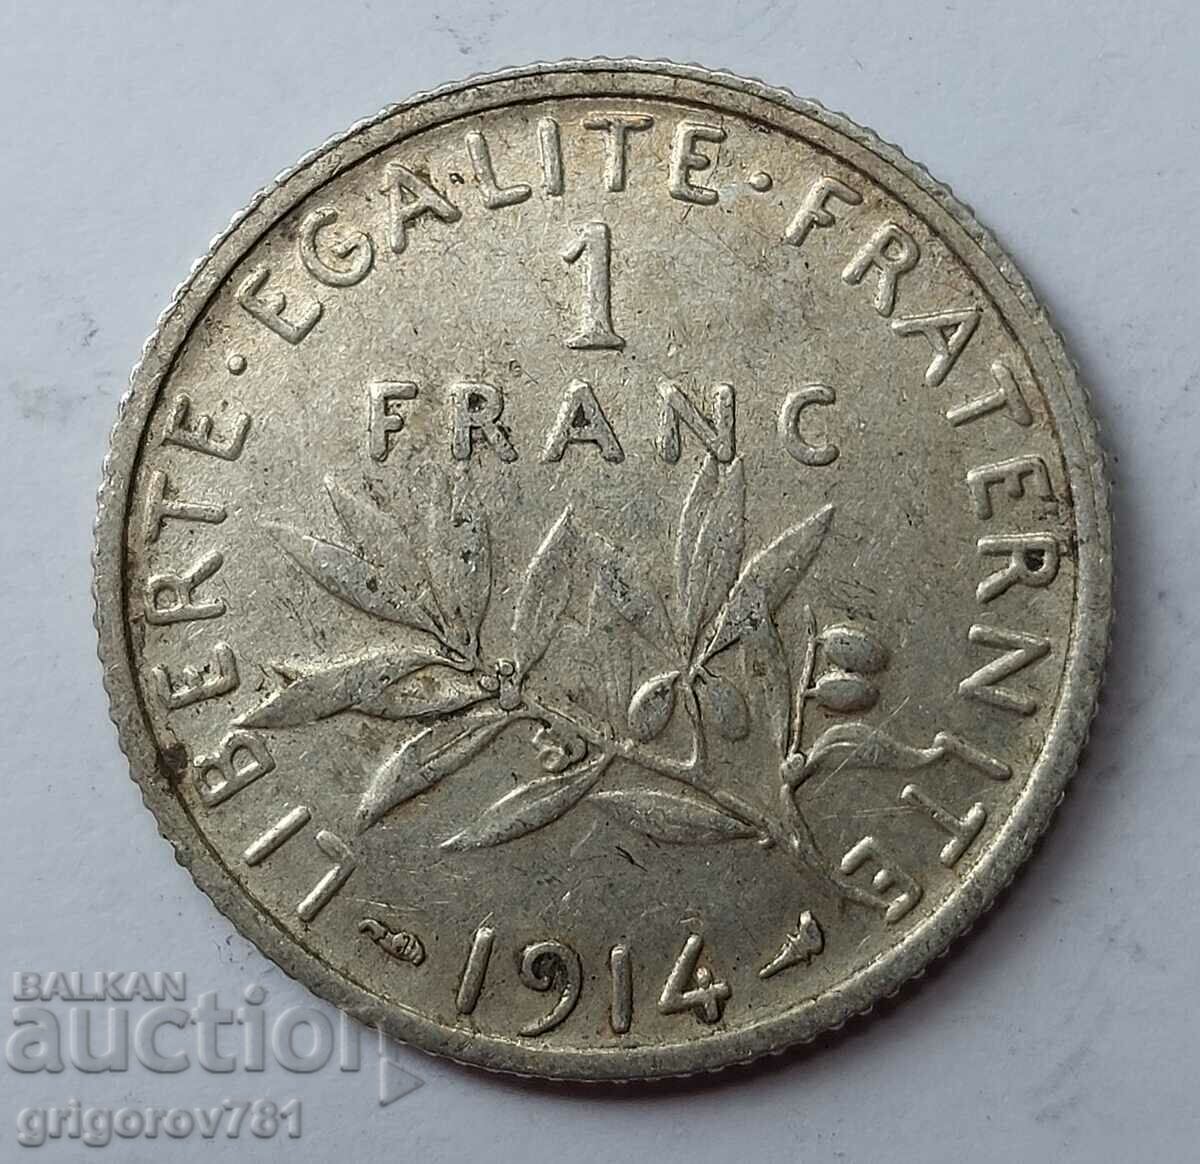 1 franc silver France 1914 - silver coin №25